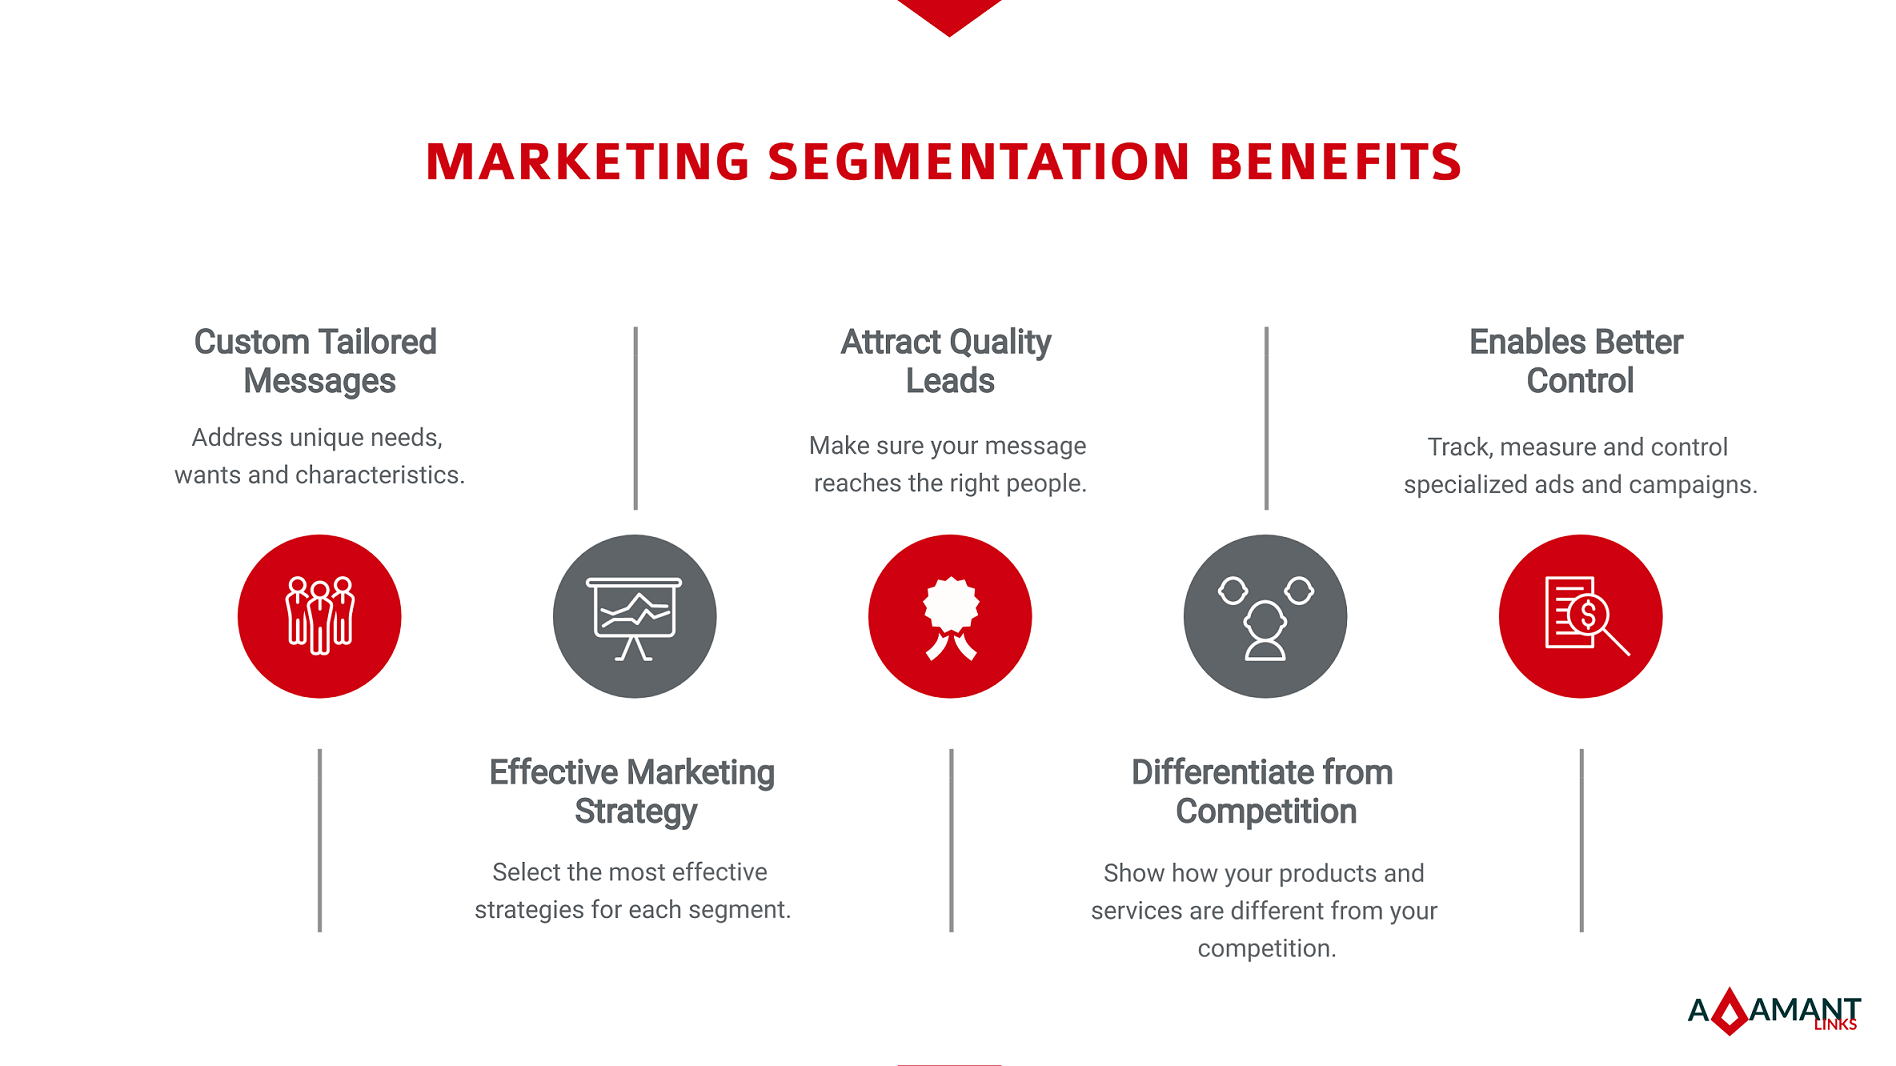 Adamant Links - Market Segmentation Benefits